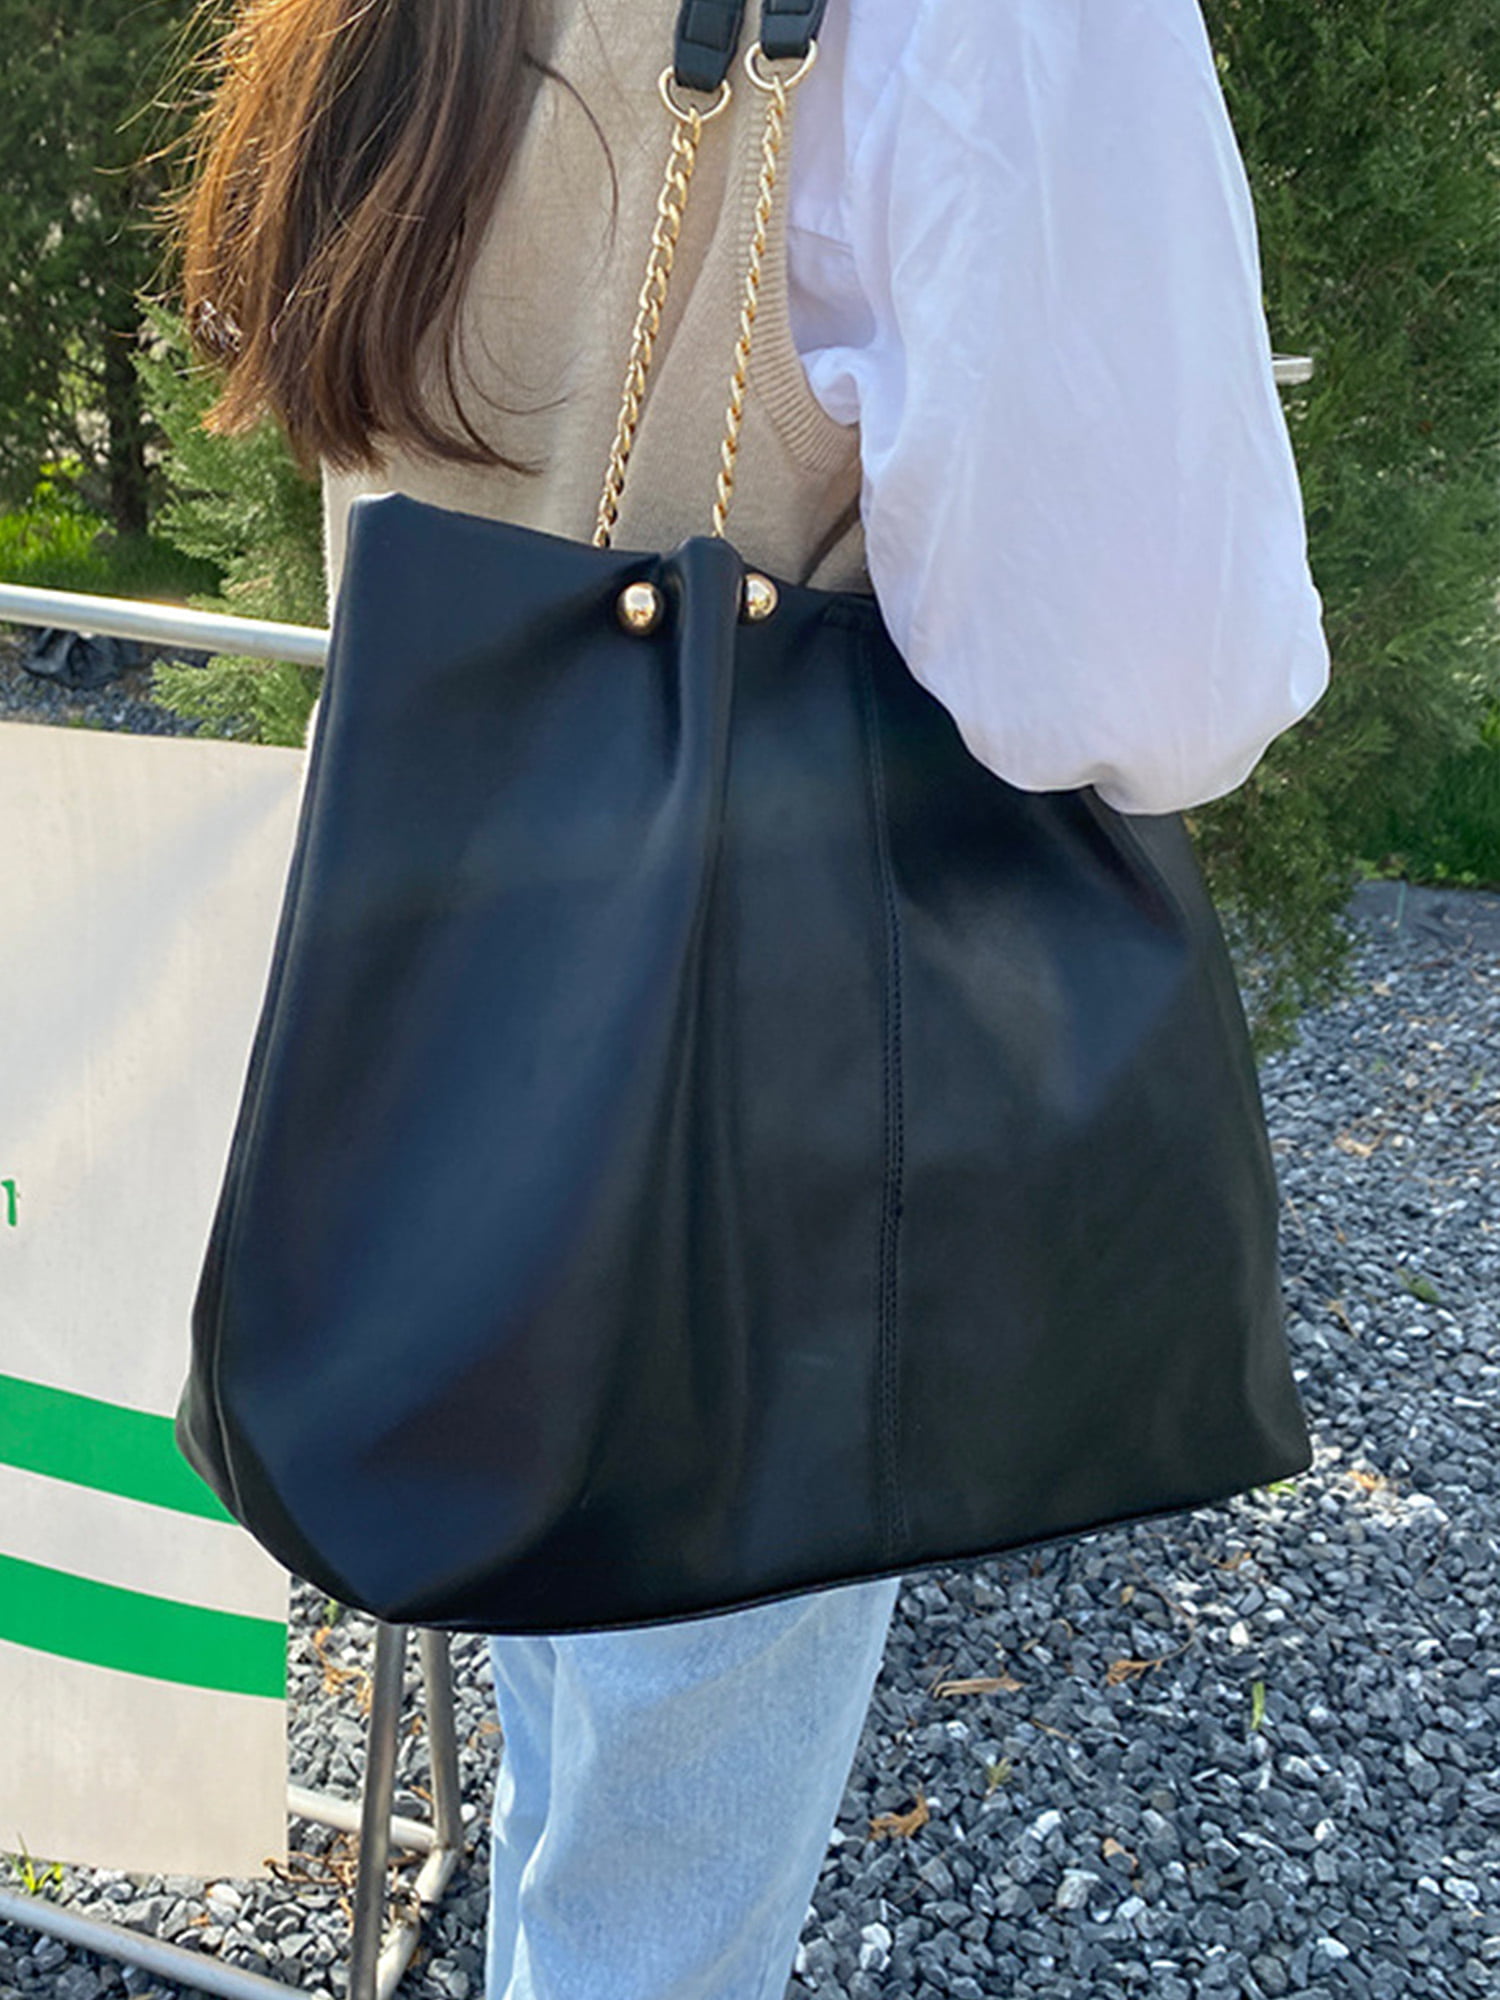 Frontwalk Handbag for Women Top Handle Shoulder Bags PU Leather Crossbody  Bag Large Capacity Purse Satchel Bag Black